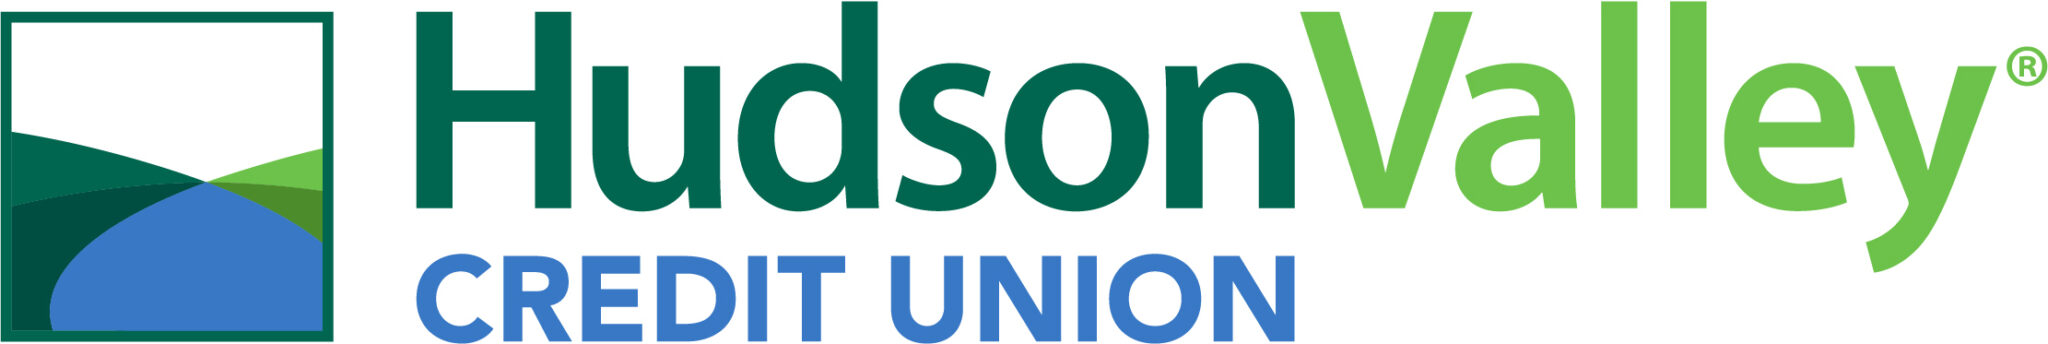 Hudson Valley Credit Union - Logo